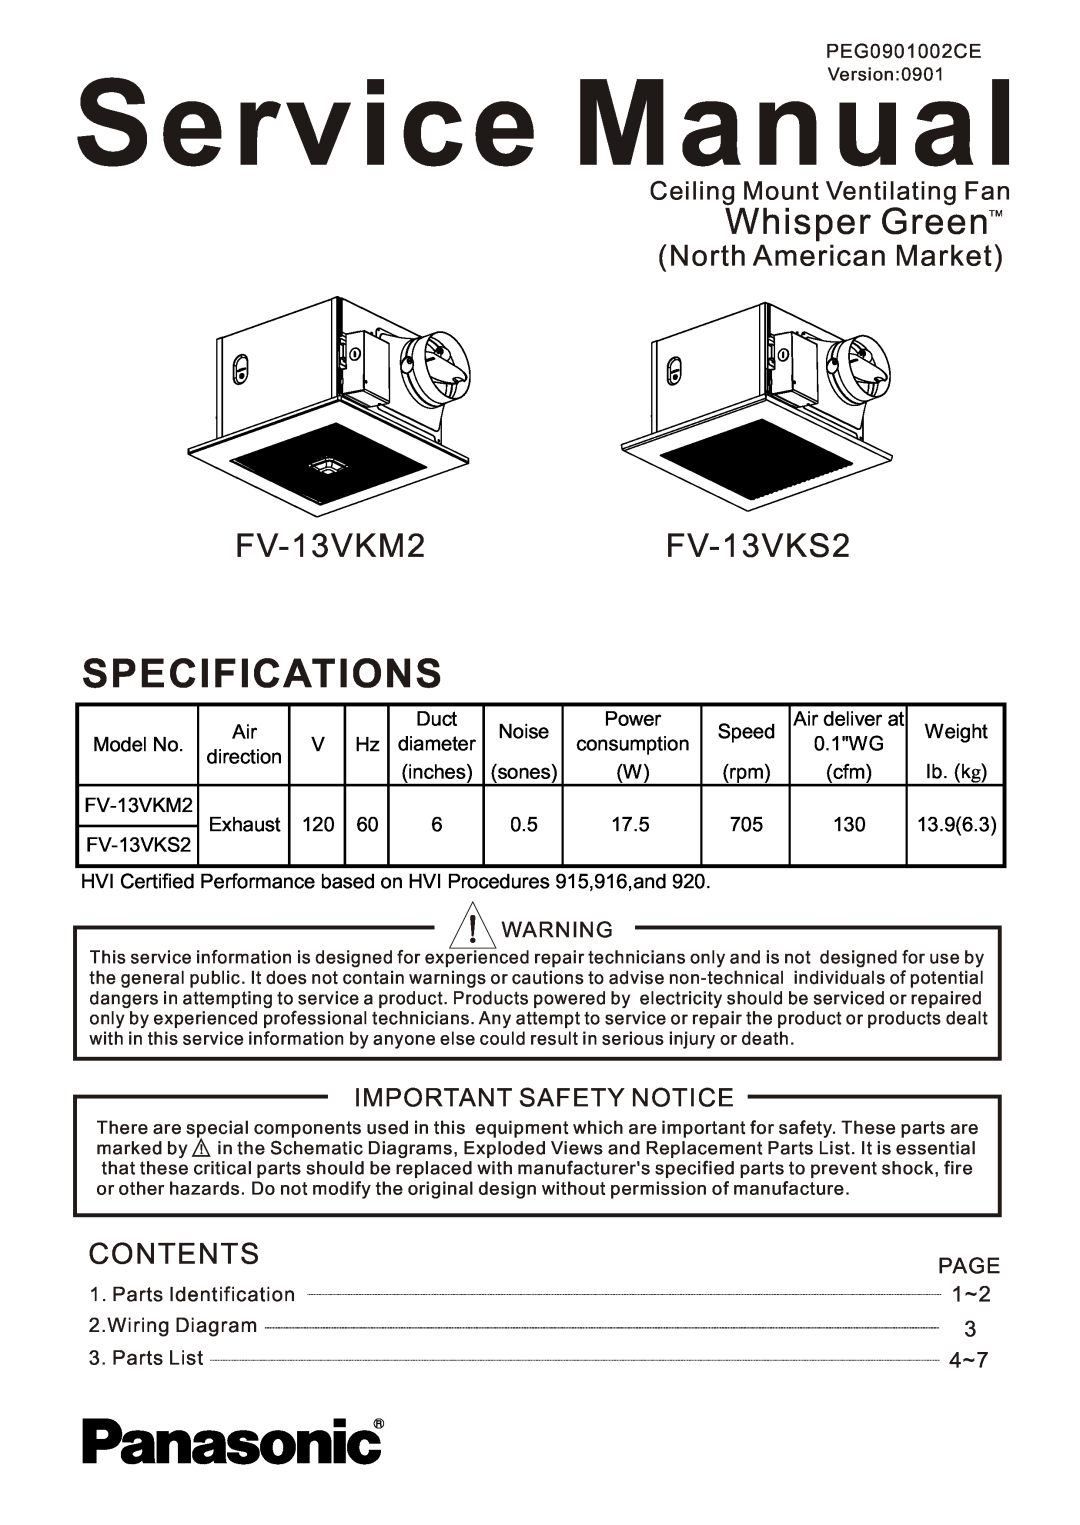 Panasonic service manual FV-13VKM2FV-13VKS2, Page, Specifications, Whisper GreenTM, North American Market, Contents 